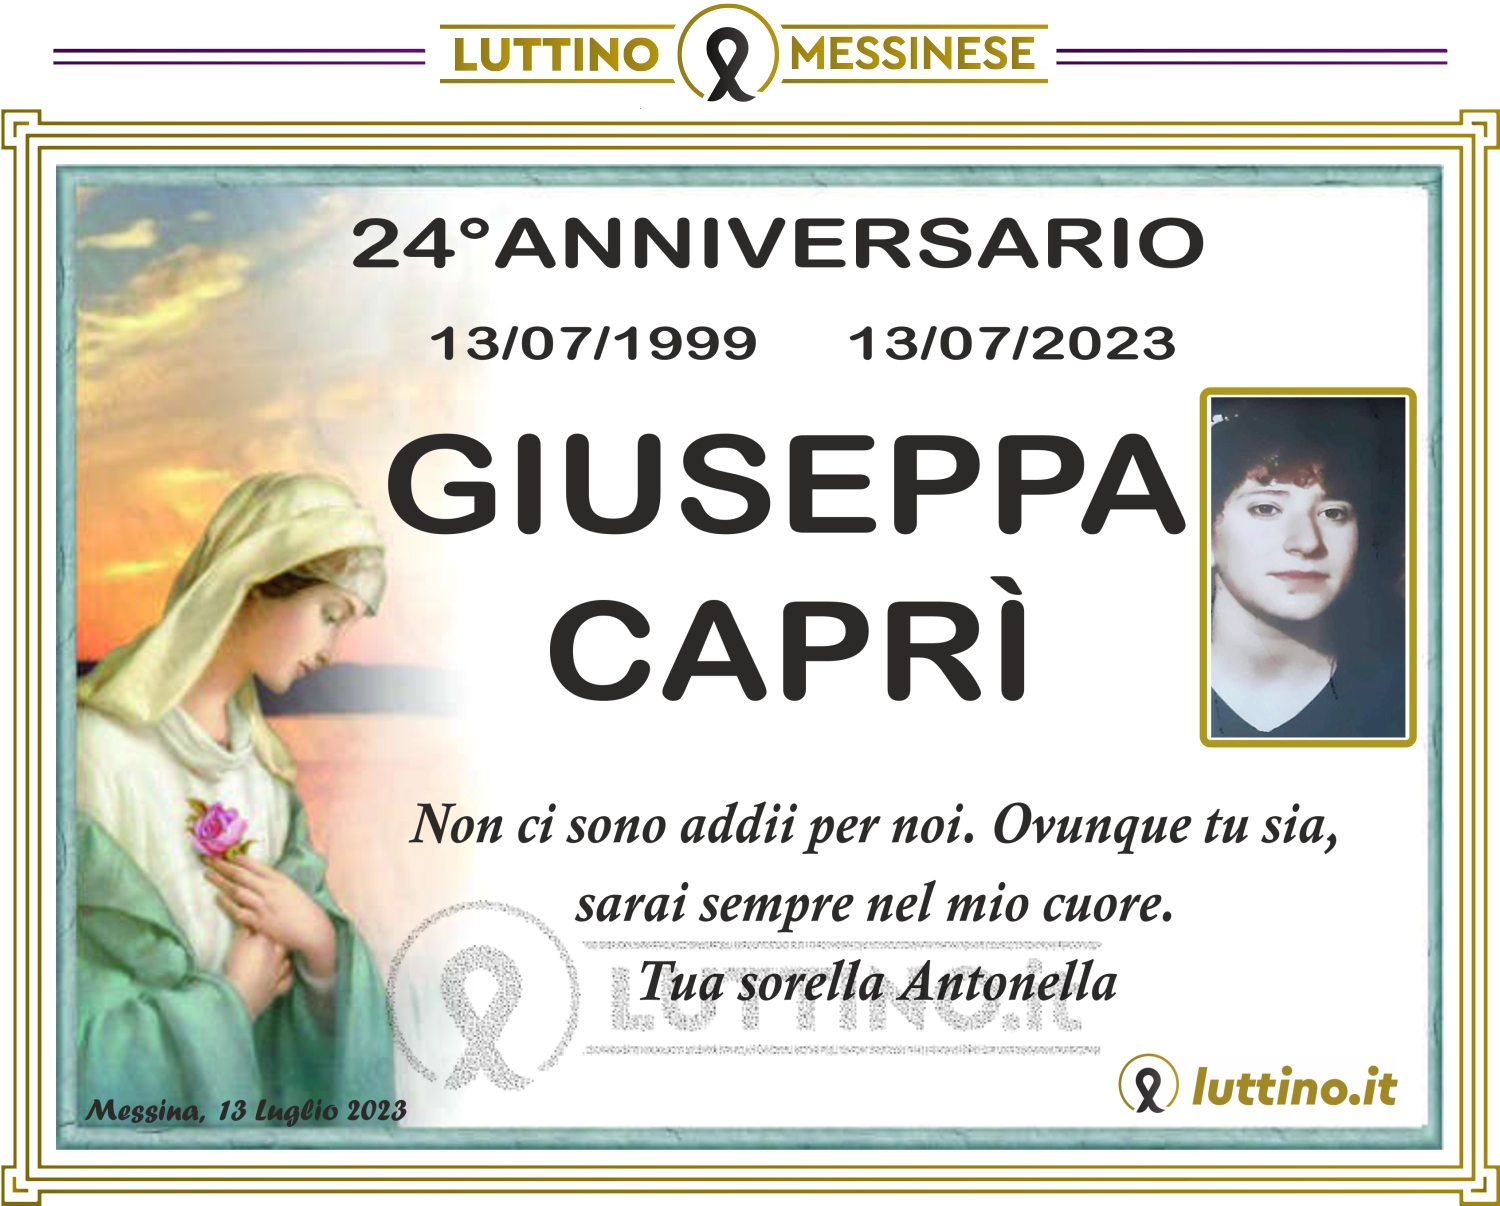 Giuseppa Caprì